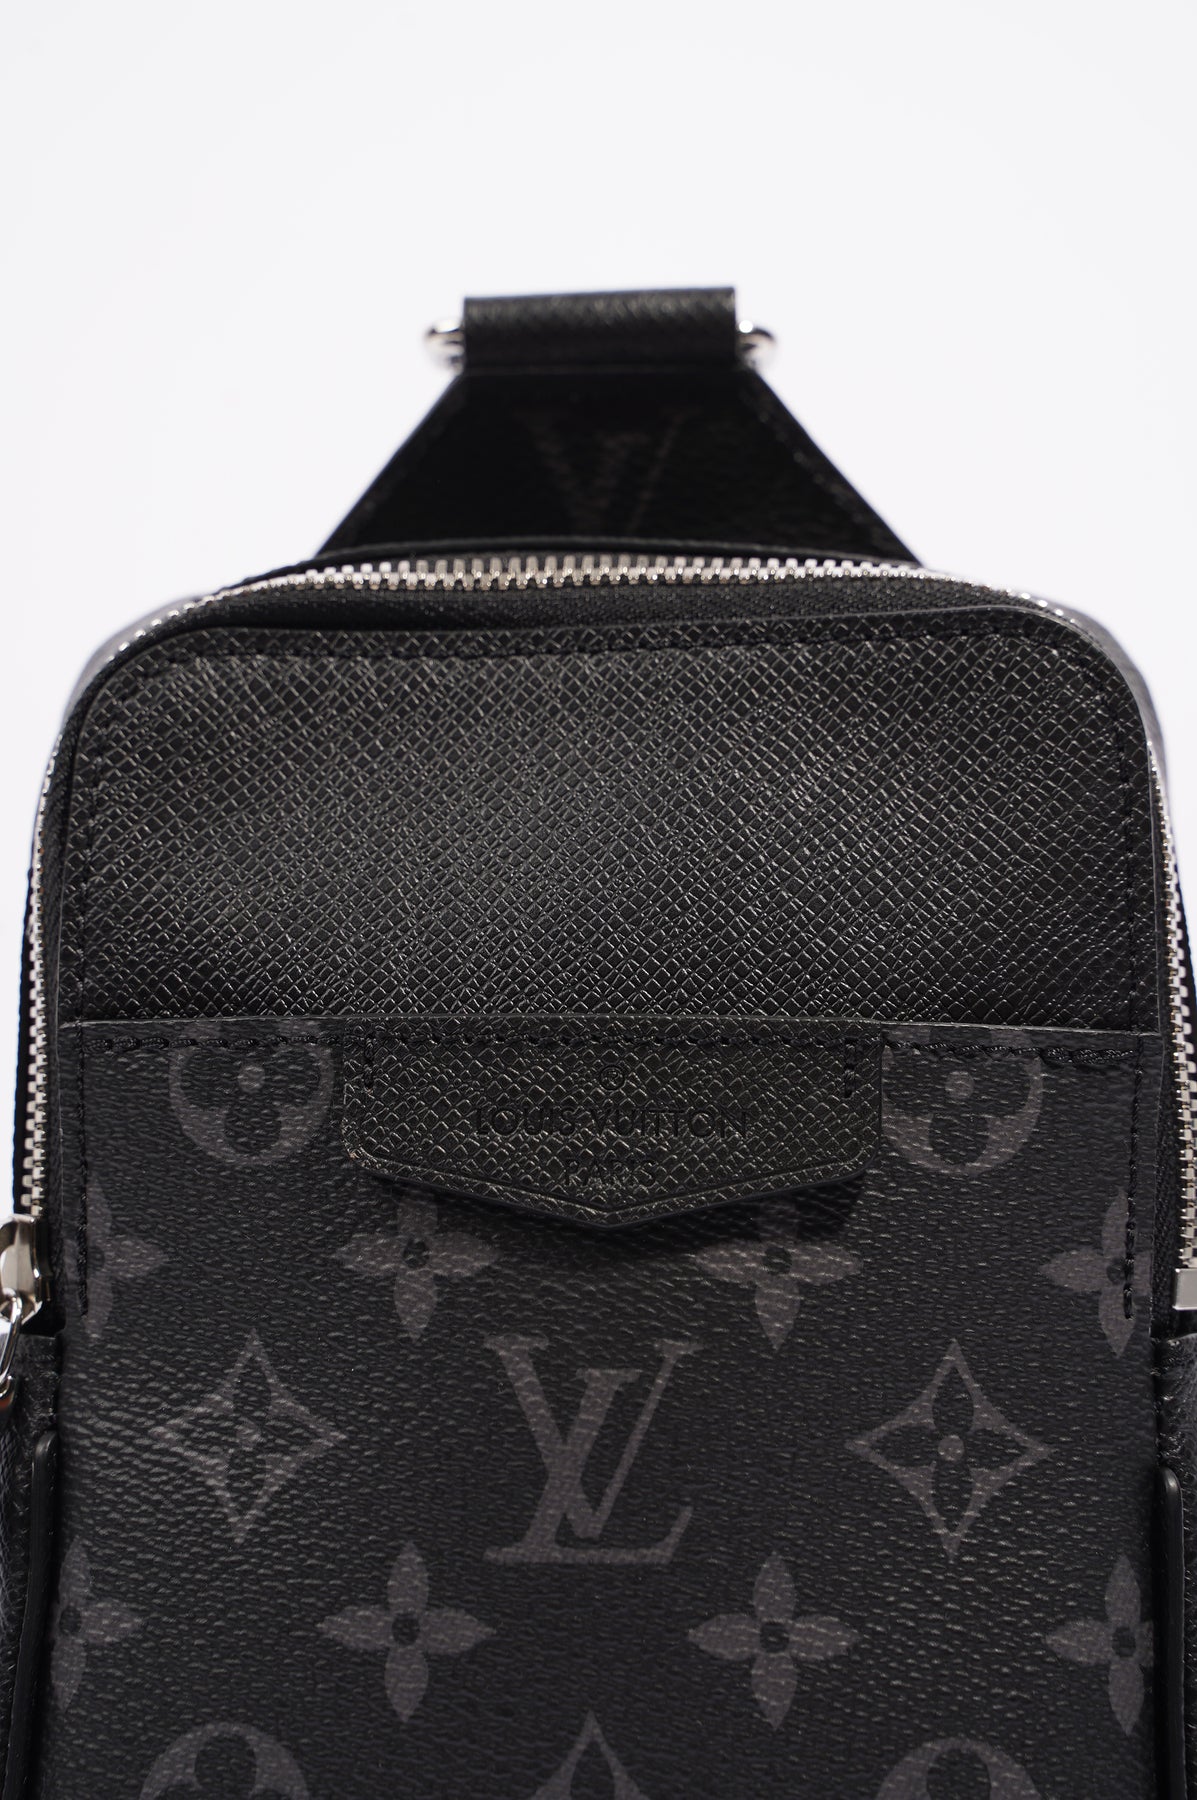 LOUIS VUITTON Monogram Bags & Handbags for Men